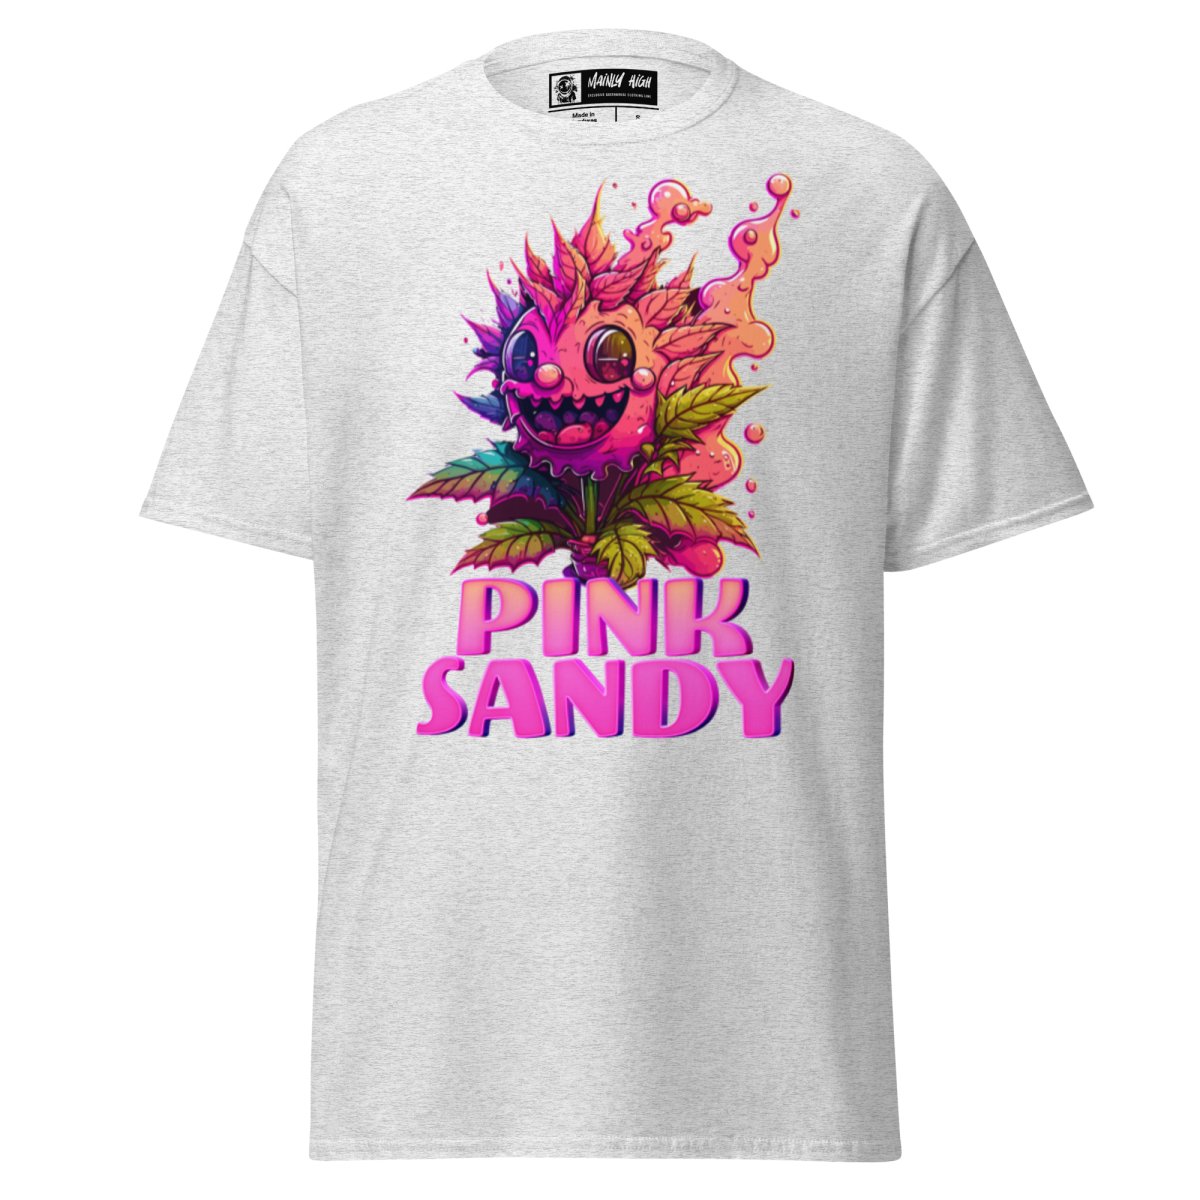 Pink Sandy T-Shirt - Mainly High